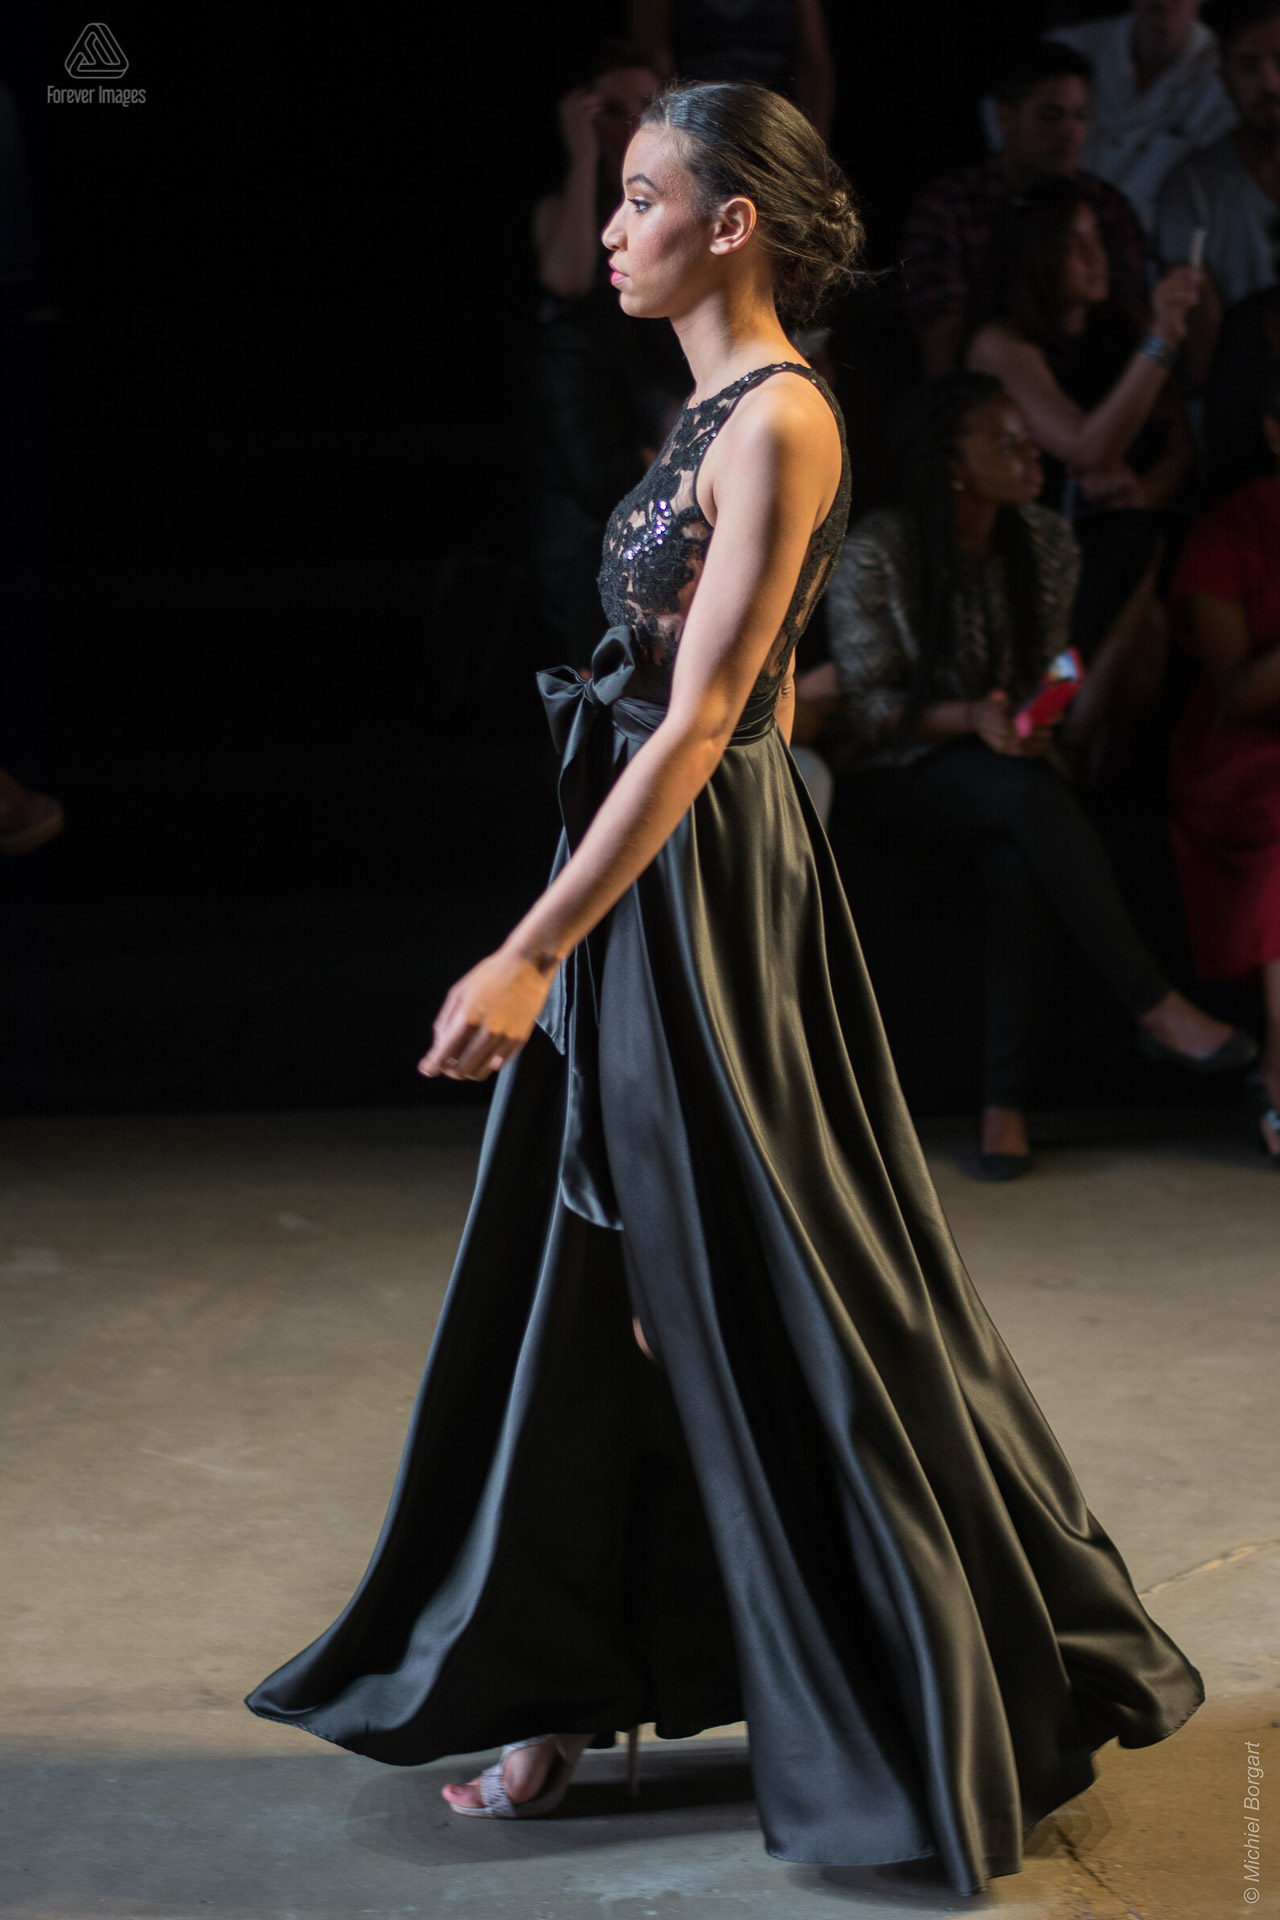 Fashionfoto fashionfoto model in zwarte jurk tijdens de Amsterdam Fashion Week | Fashionfotograaf Michiel Borgart - Forever Images.